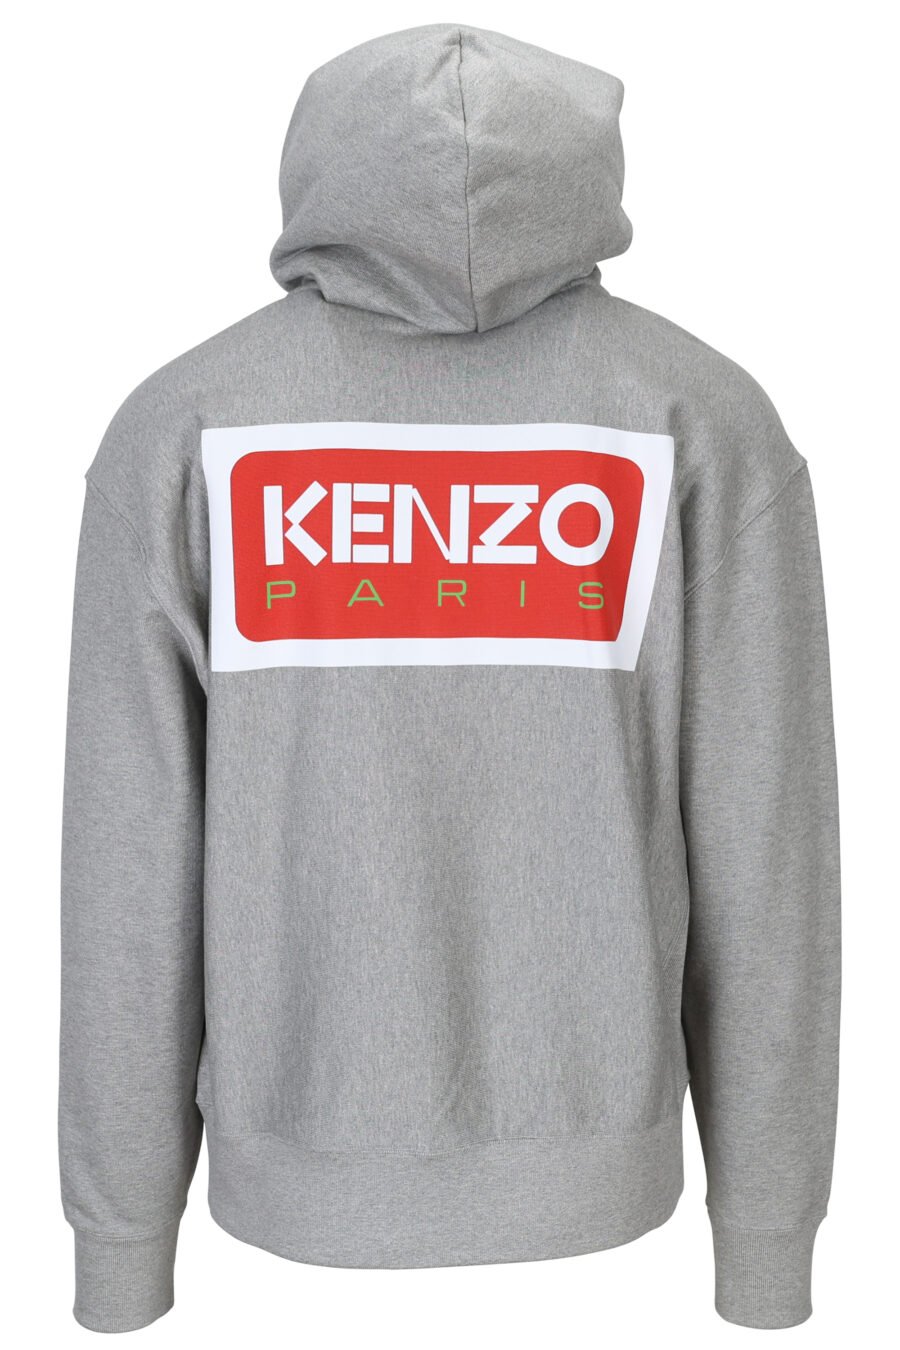 Graues Kapuzensweatshirt mit "kenzo paris" Maxilogo auf dem Rücken - 3612230537491 1